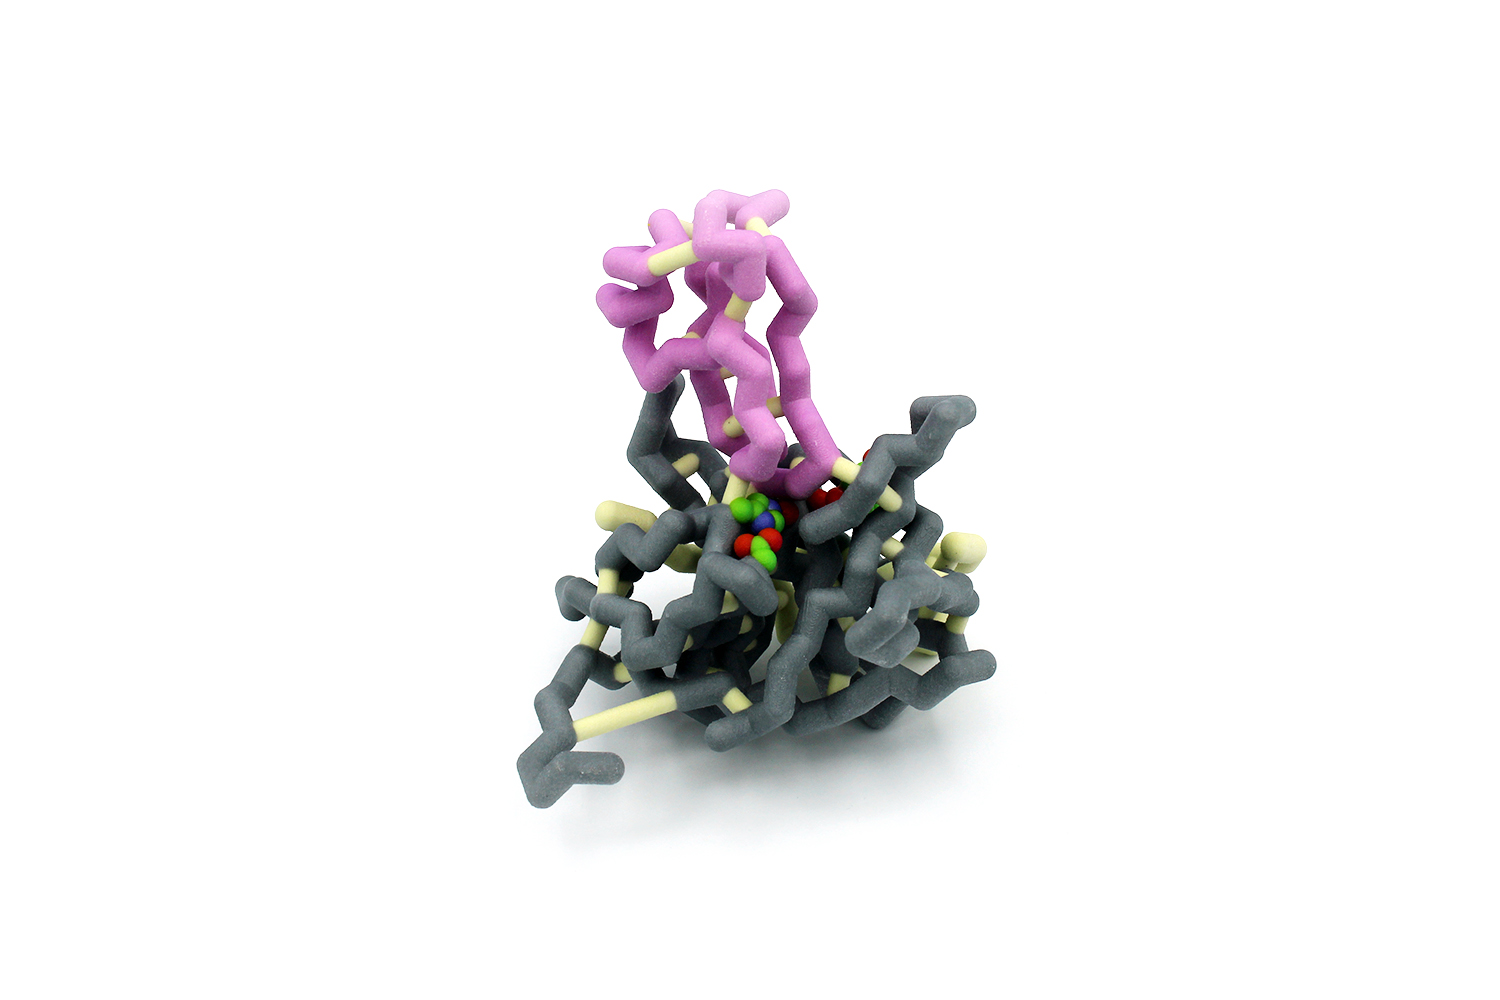 Physical model of Dengue virus protease